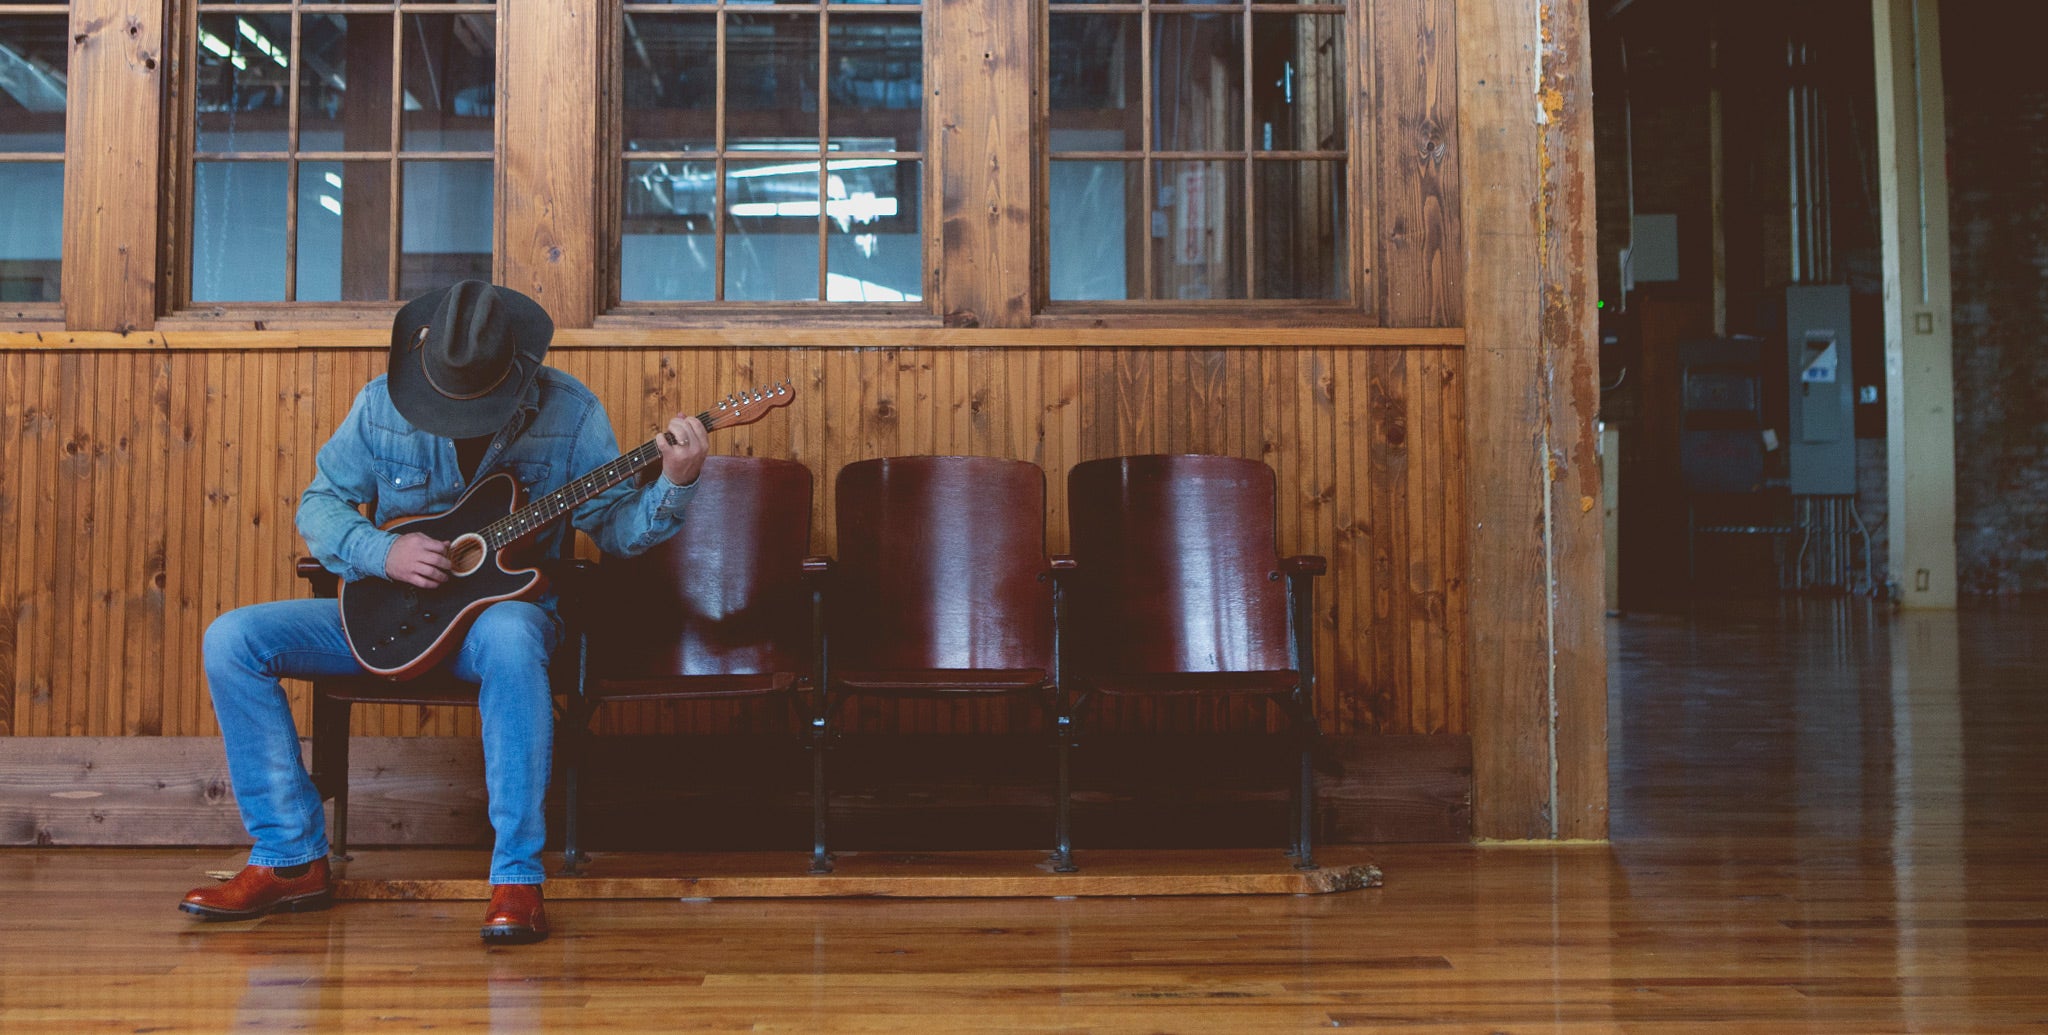 Man sitting on wooden stadium seats in wood building, wearing all denim & a cowboy hat, strumming a guitar